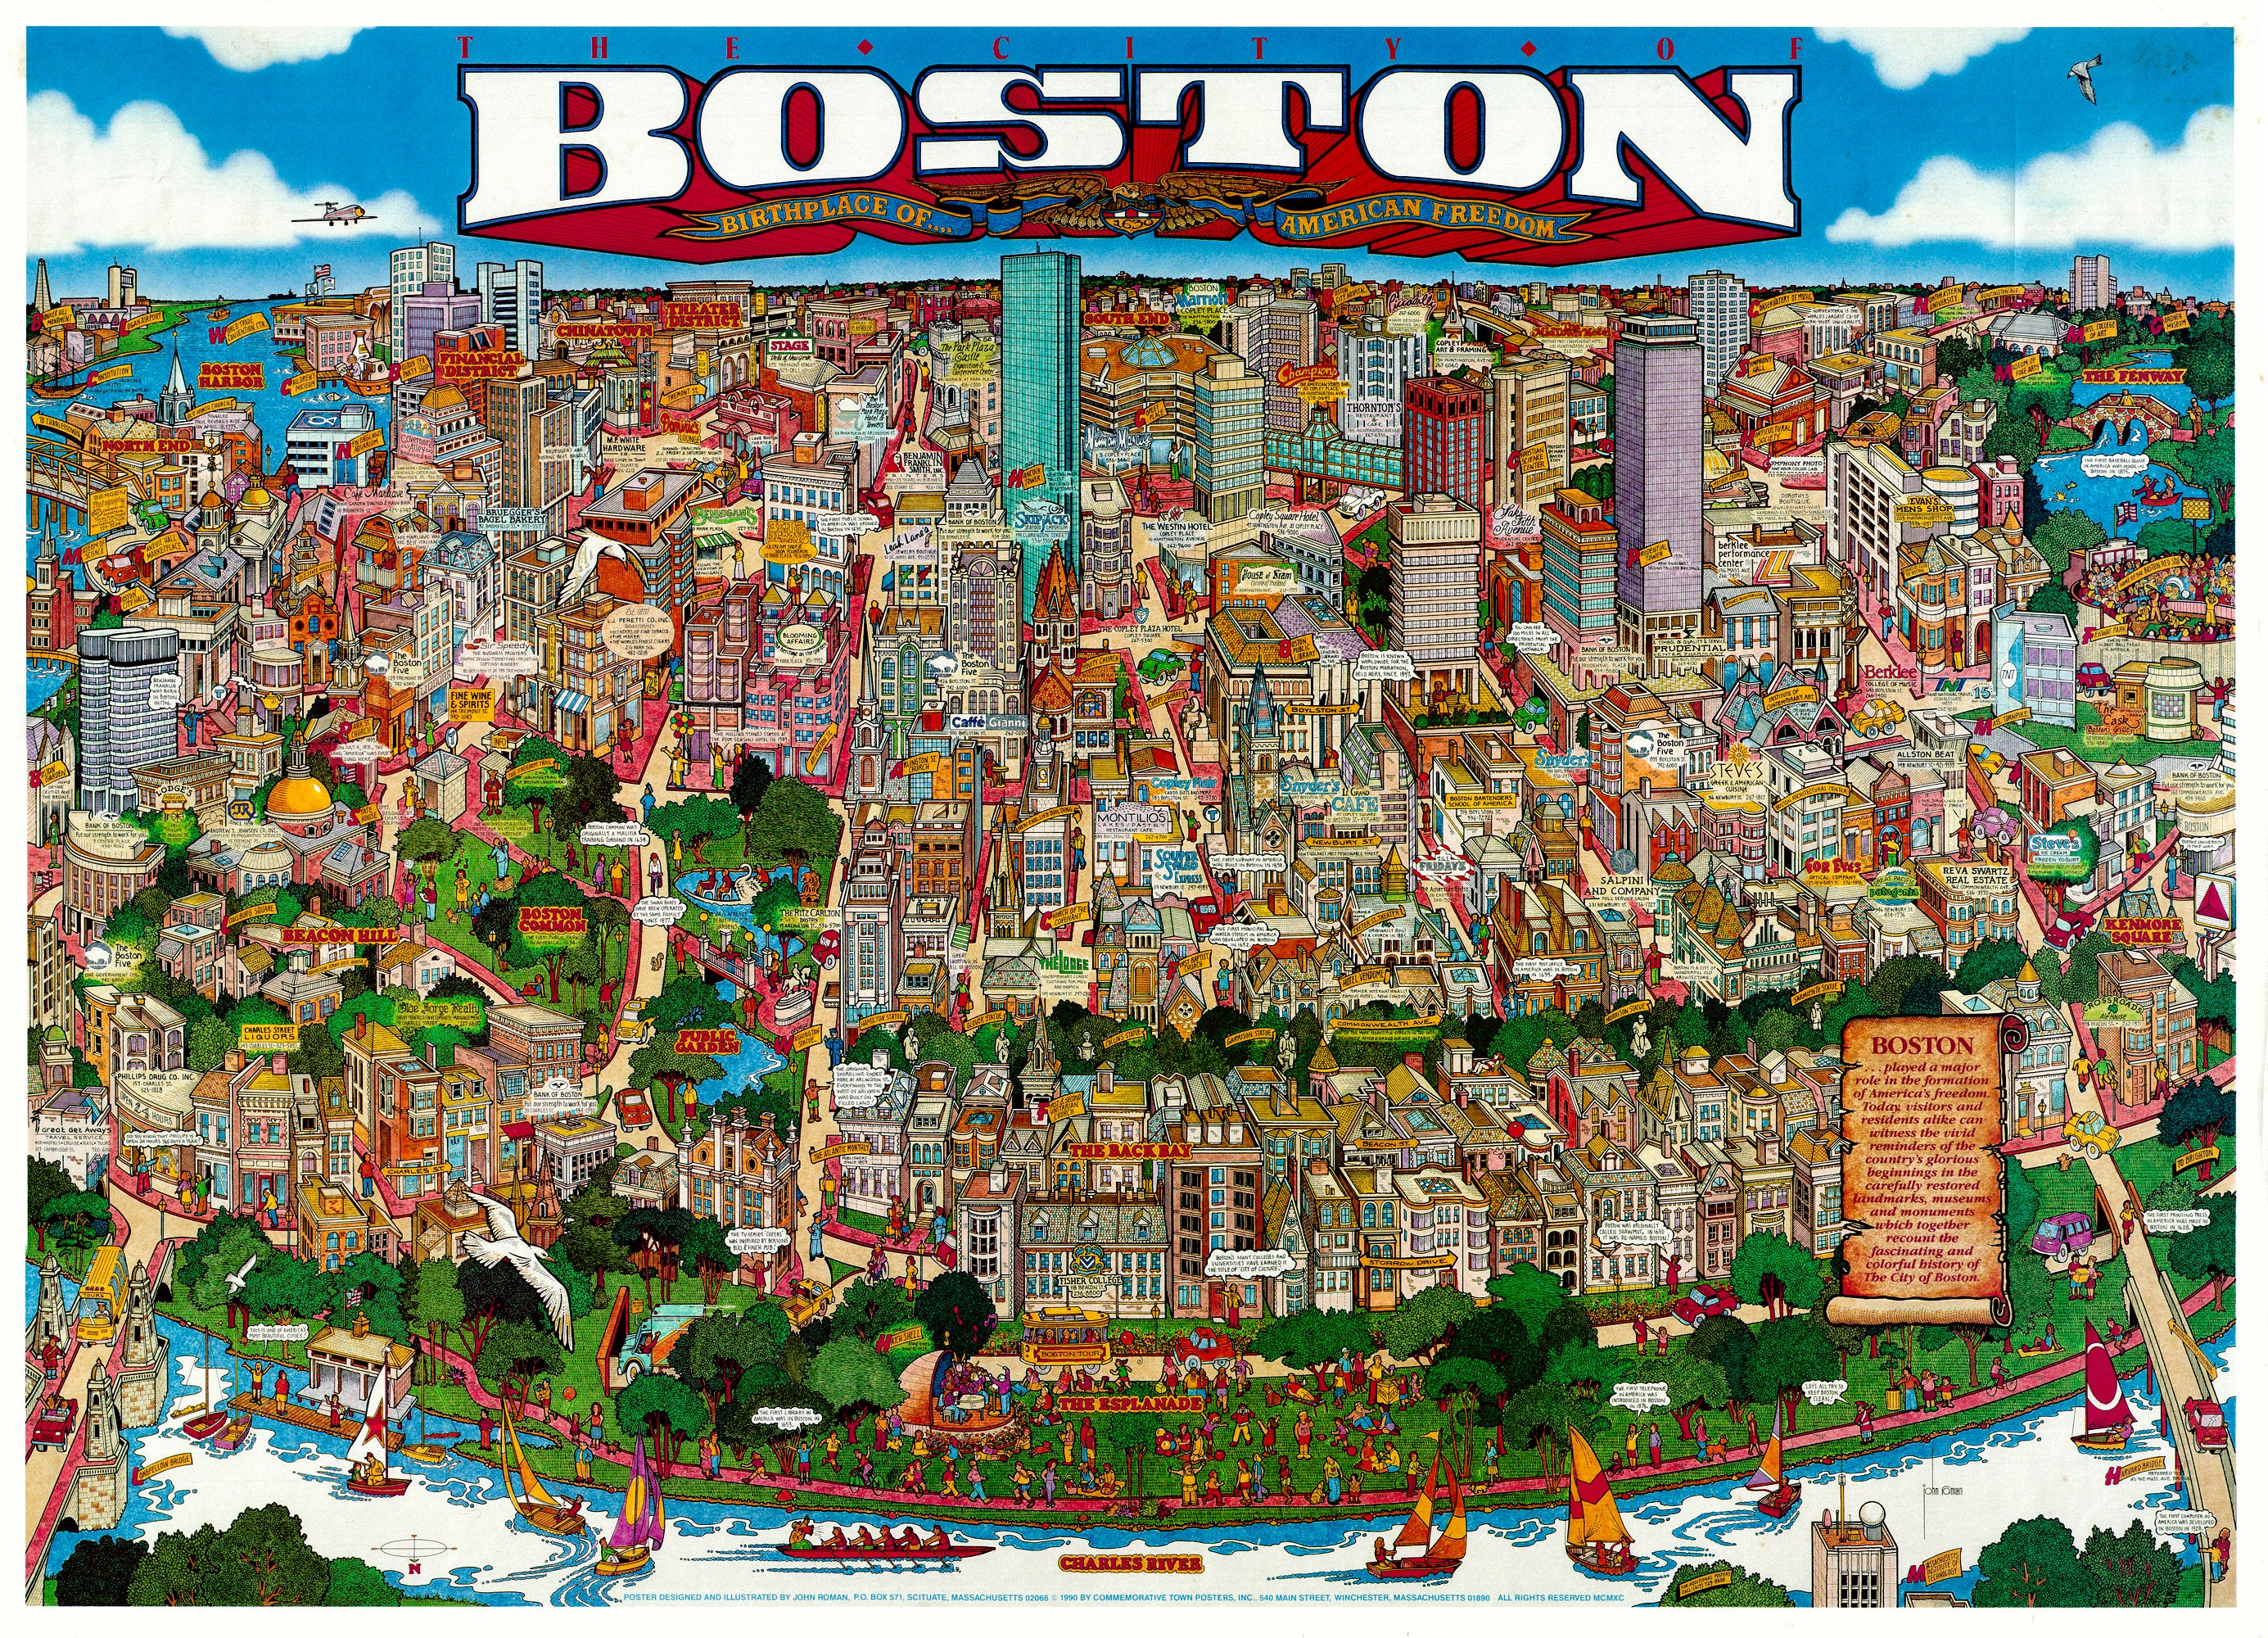 (MA. - Boston) The City Of Boston - Birthplace Of American Freedom